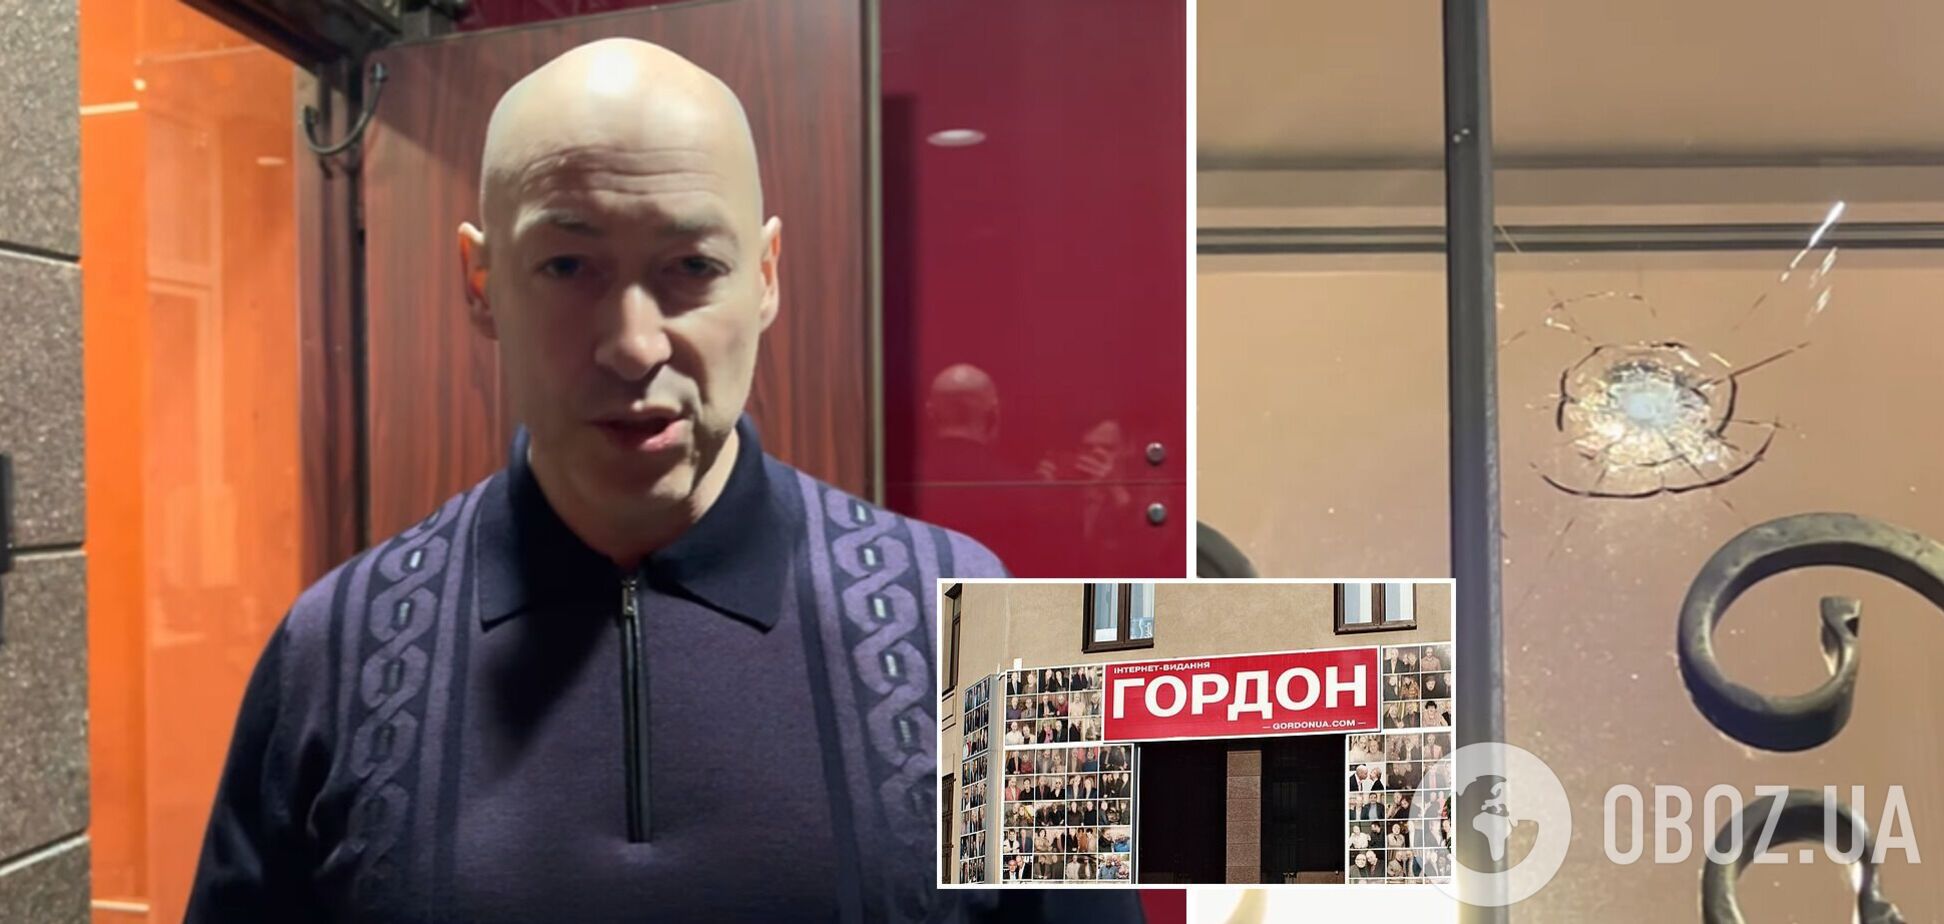 Дмитрий Гордон заявил об обстреле редакции издания 'Гордон': видео с места инцидента